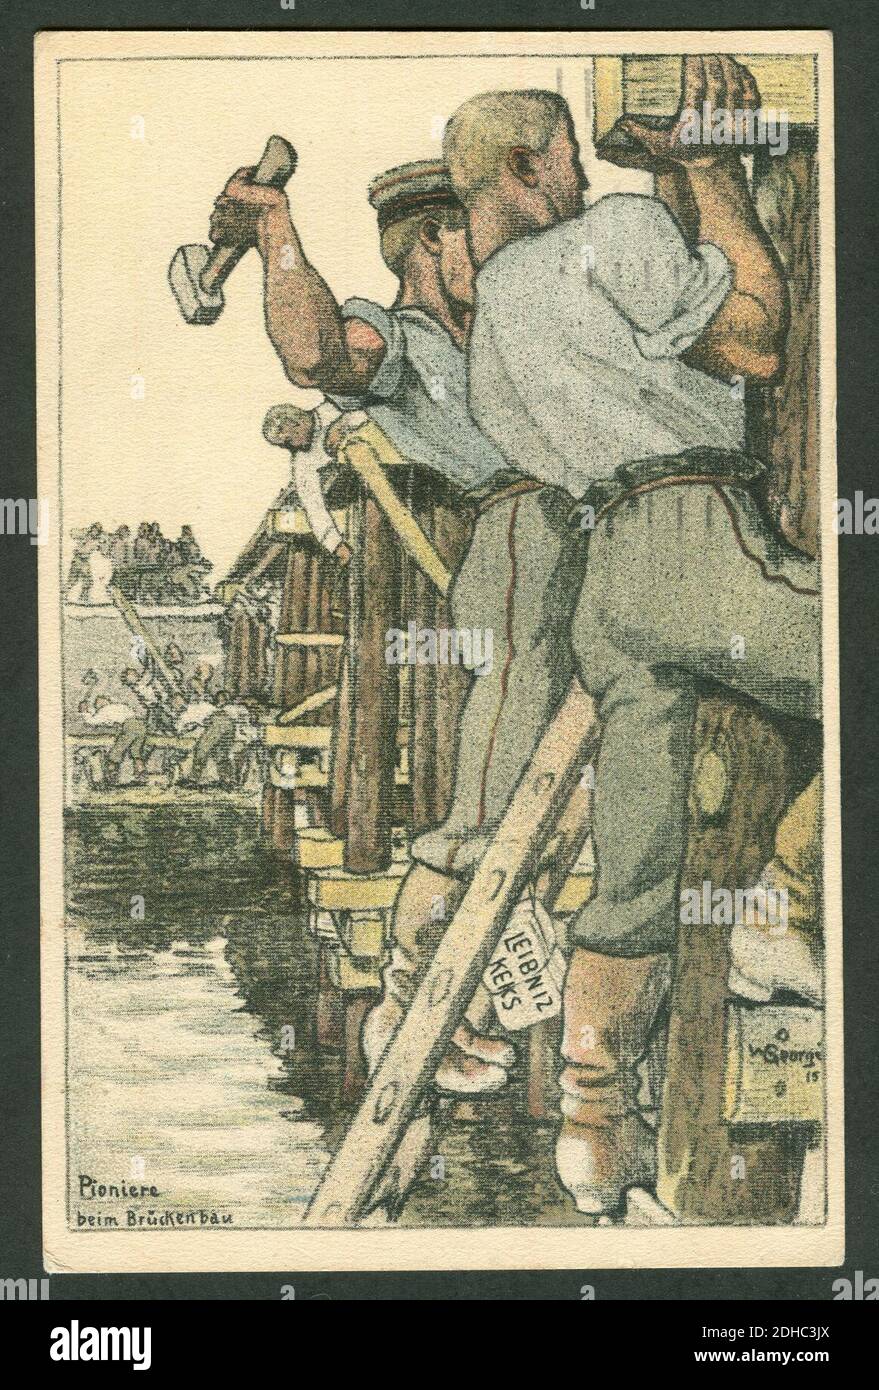 Künstlerpostkarte Walter Georgi 1915 Feldpost Pioniere beim Brückenbau H. Bahlsens Keksfabrik Hannover. Stock Photo